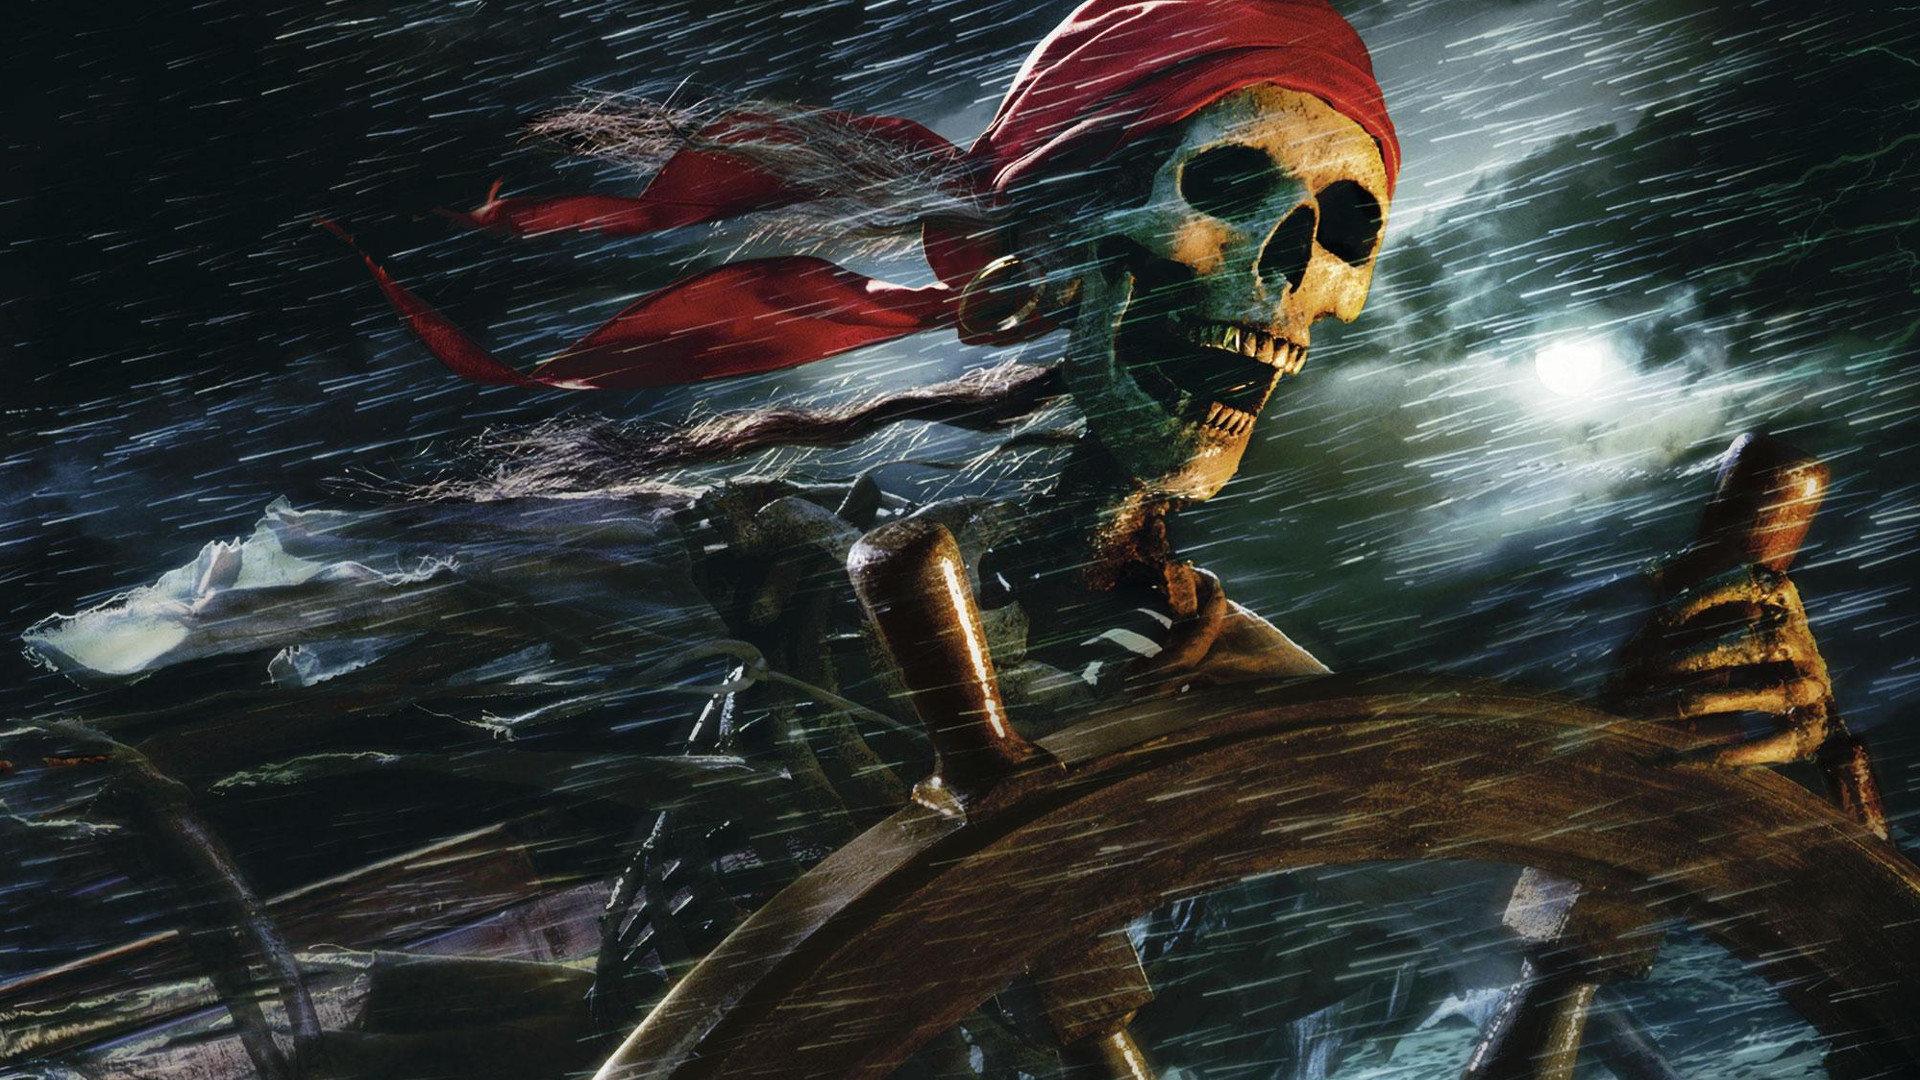 Pirates Of The Caribbean wallpaper 1920x1080 Full HD 1080p